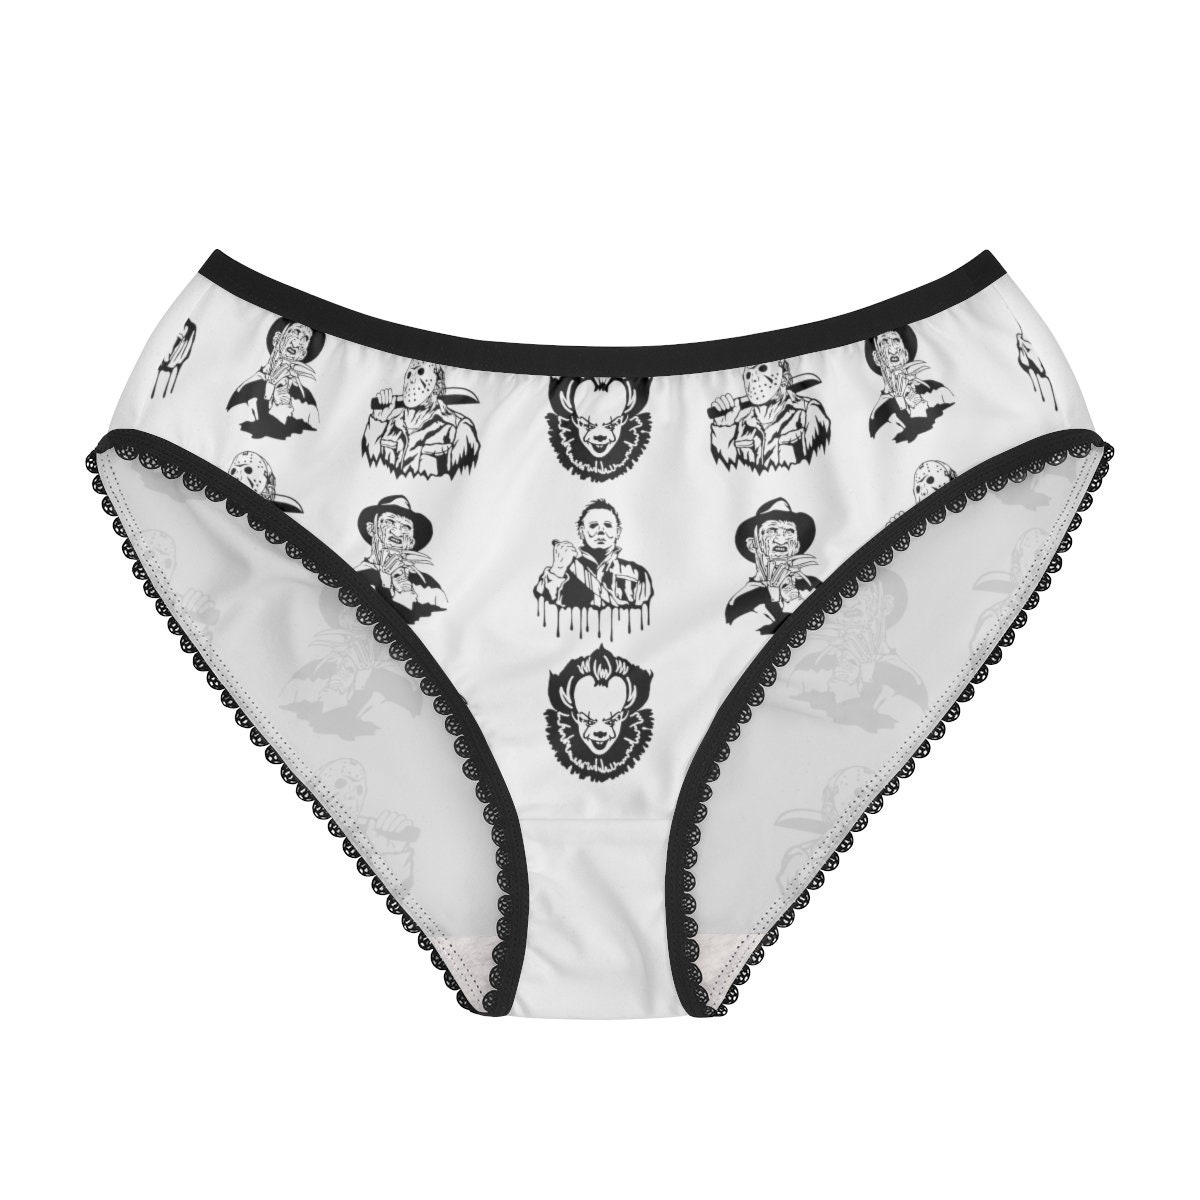 Buy Michael Myers Underwear Online In India -  India